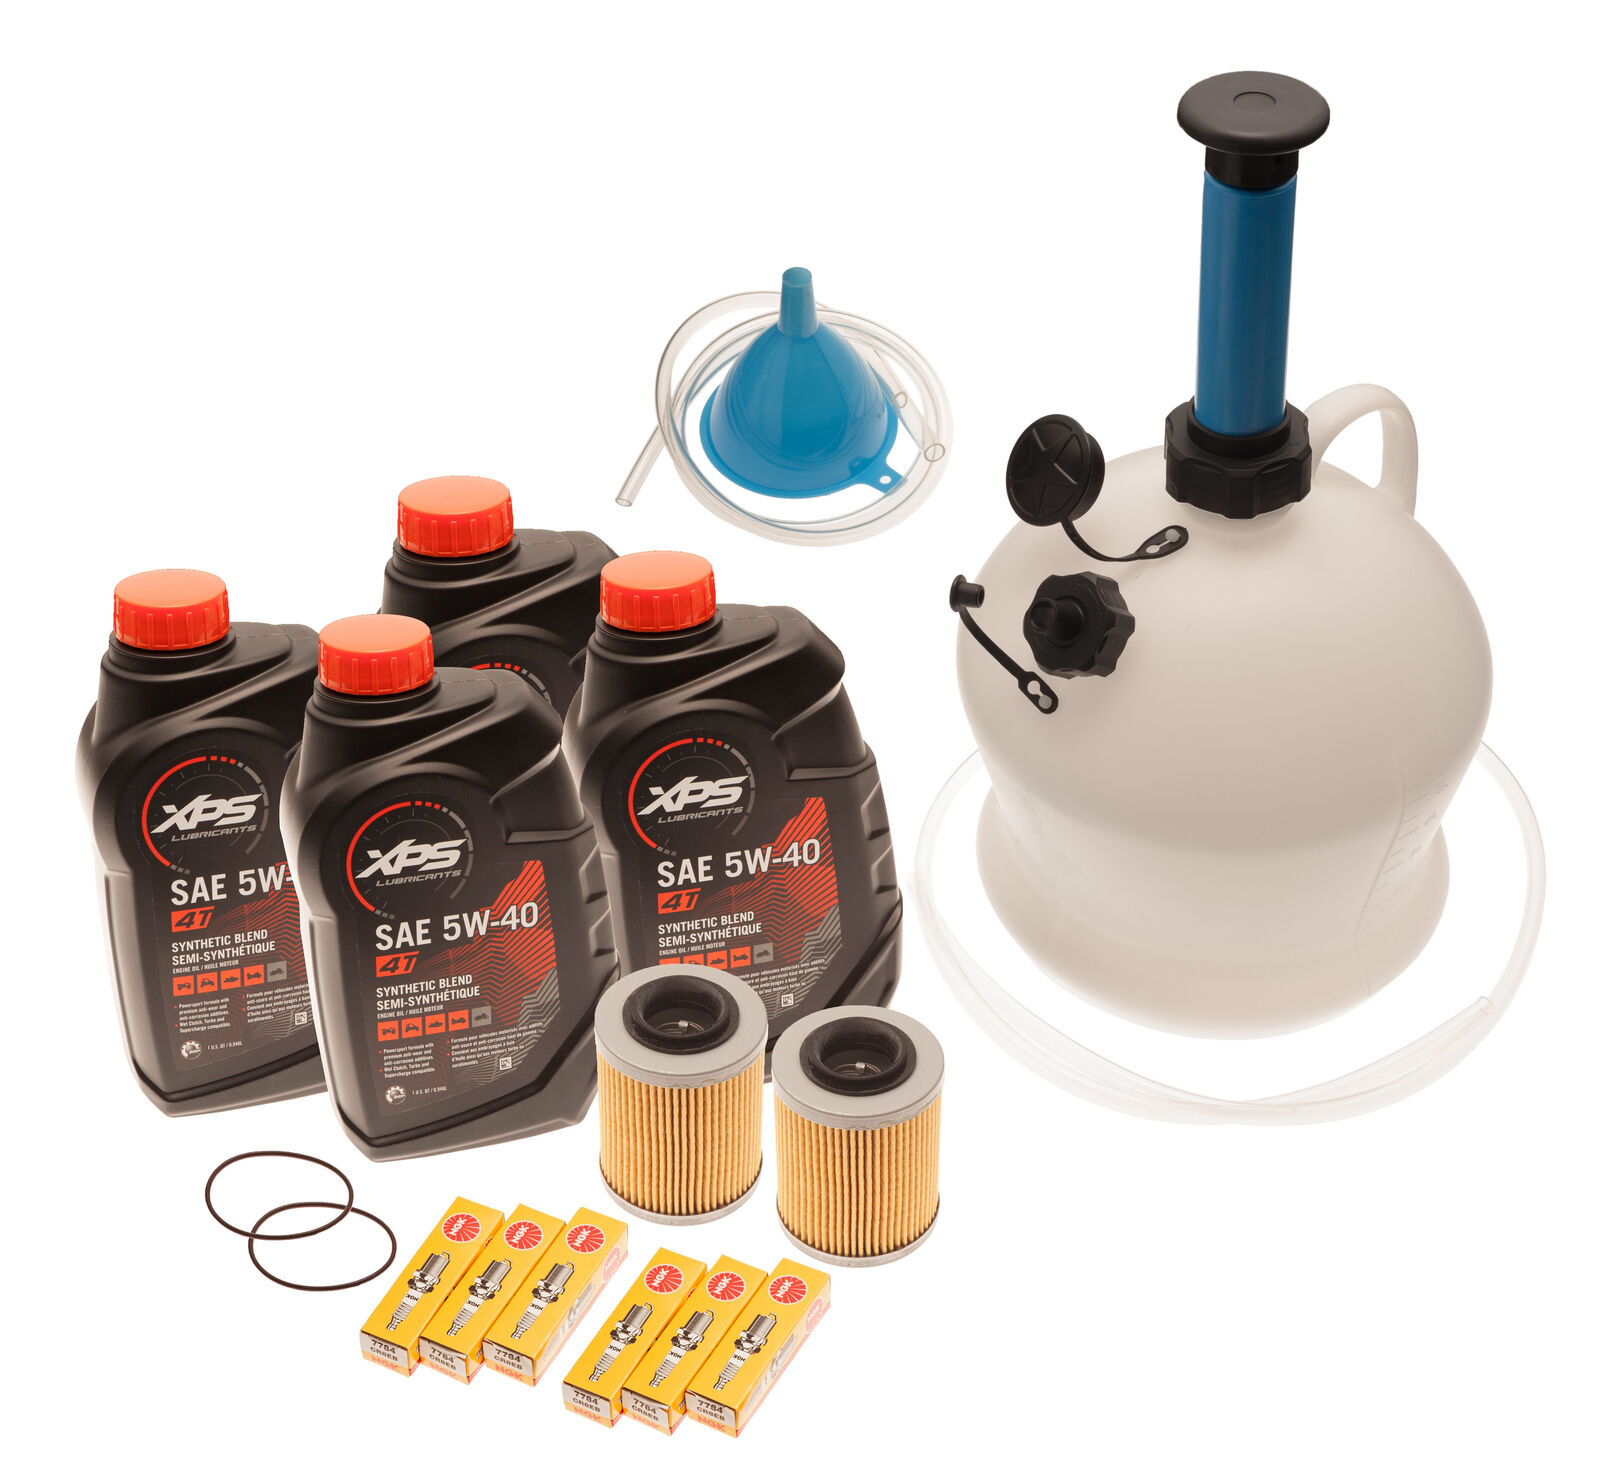 Sea Doo Spark GTI GTS 900 ACE Oil Change Kit W/ Filter Pump & Spark Plugs 2-Pack